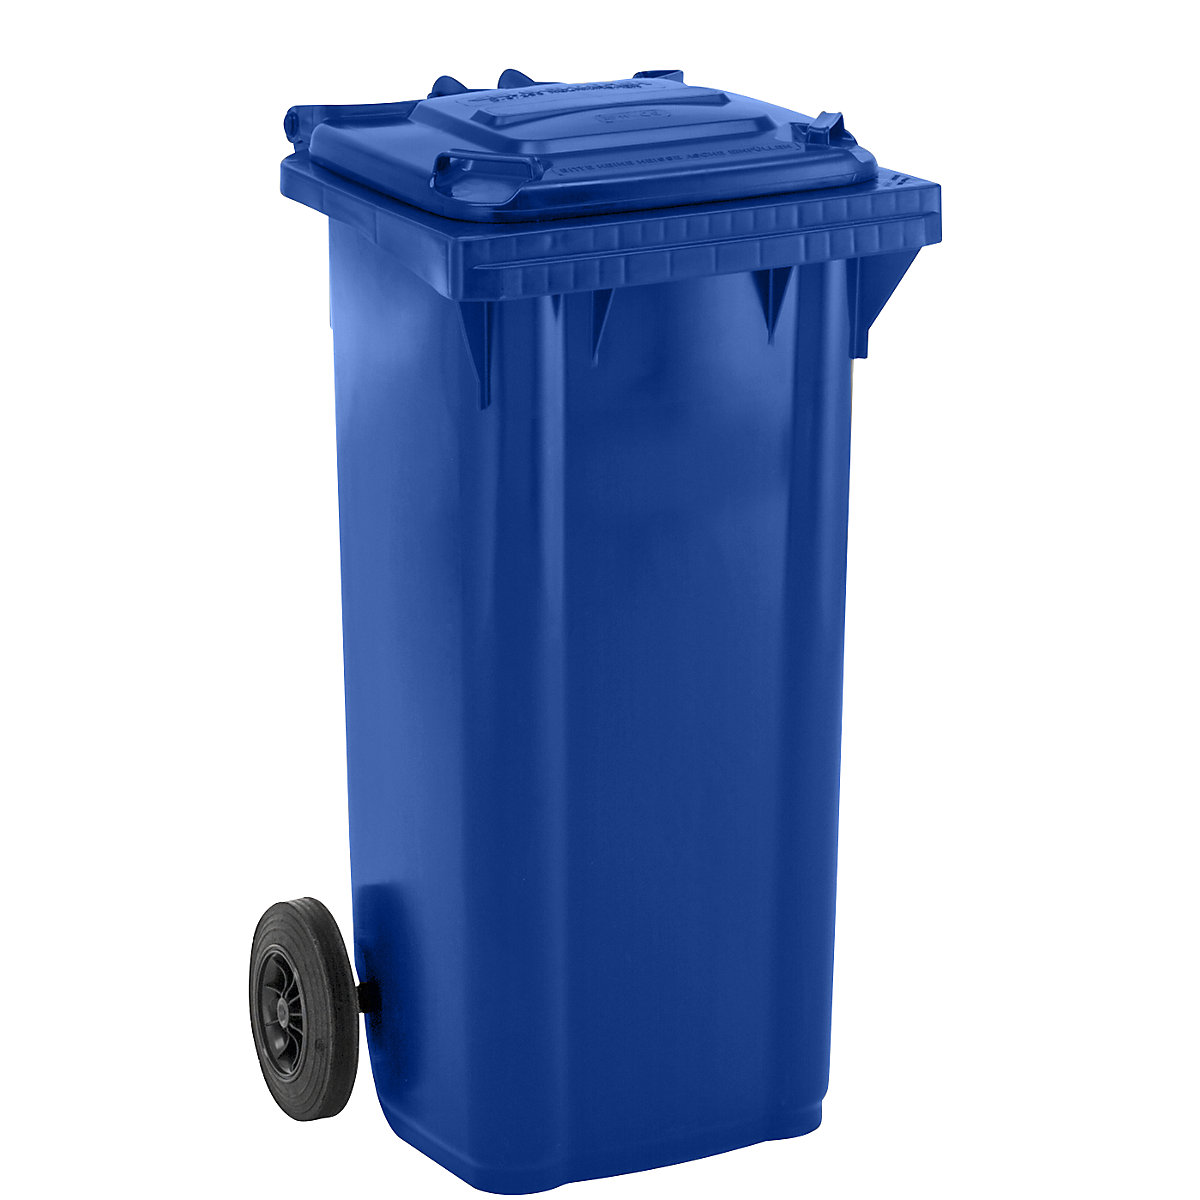 Contentor de lixo em plástico DIN EN 840 - eurokraft pro